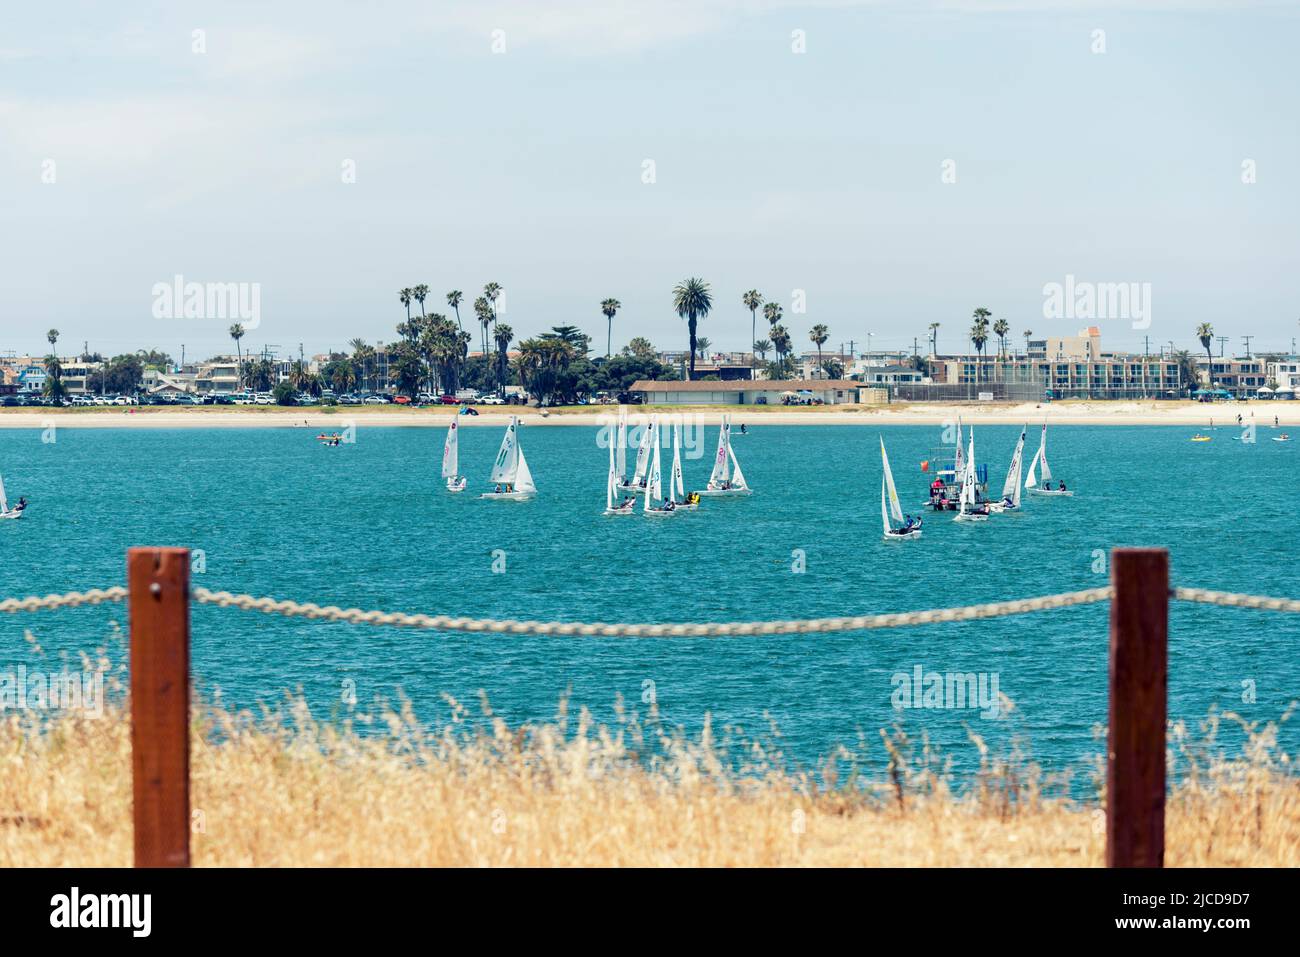 Boats on Mission Bay.  San Diego, California, USA. Stock Photo